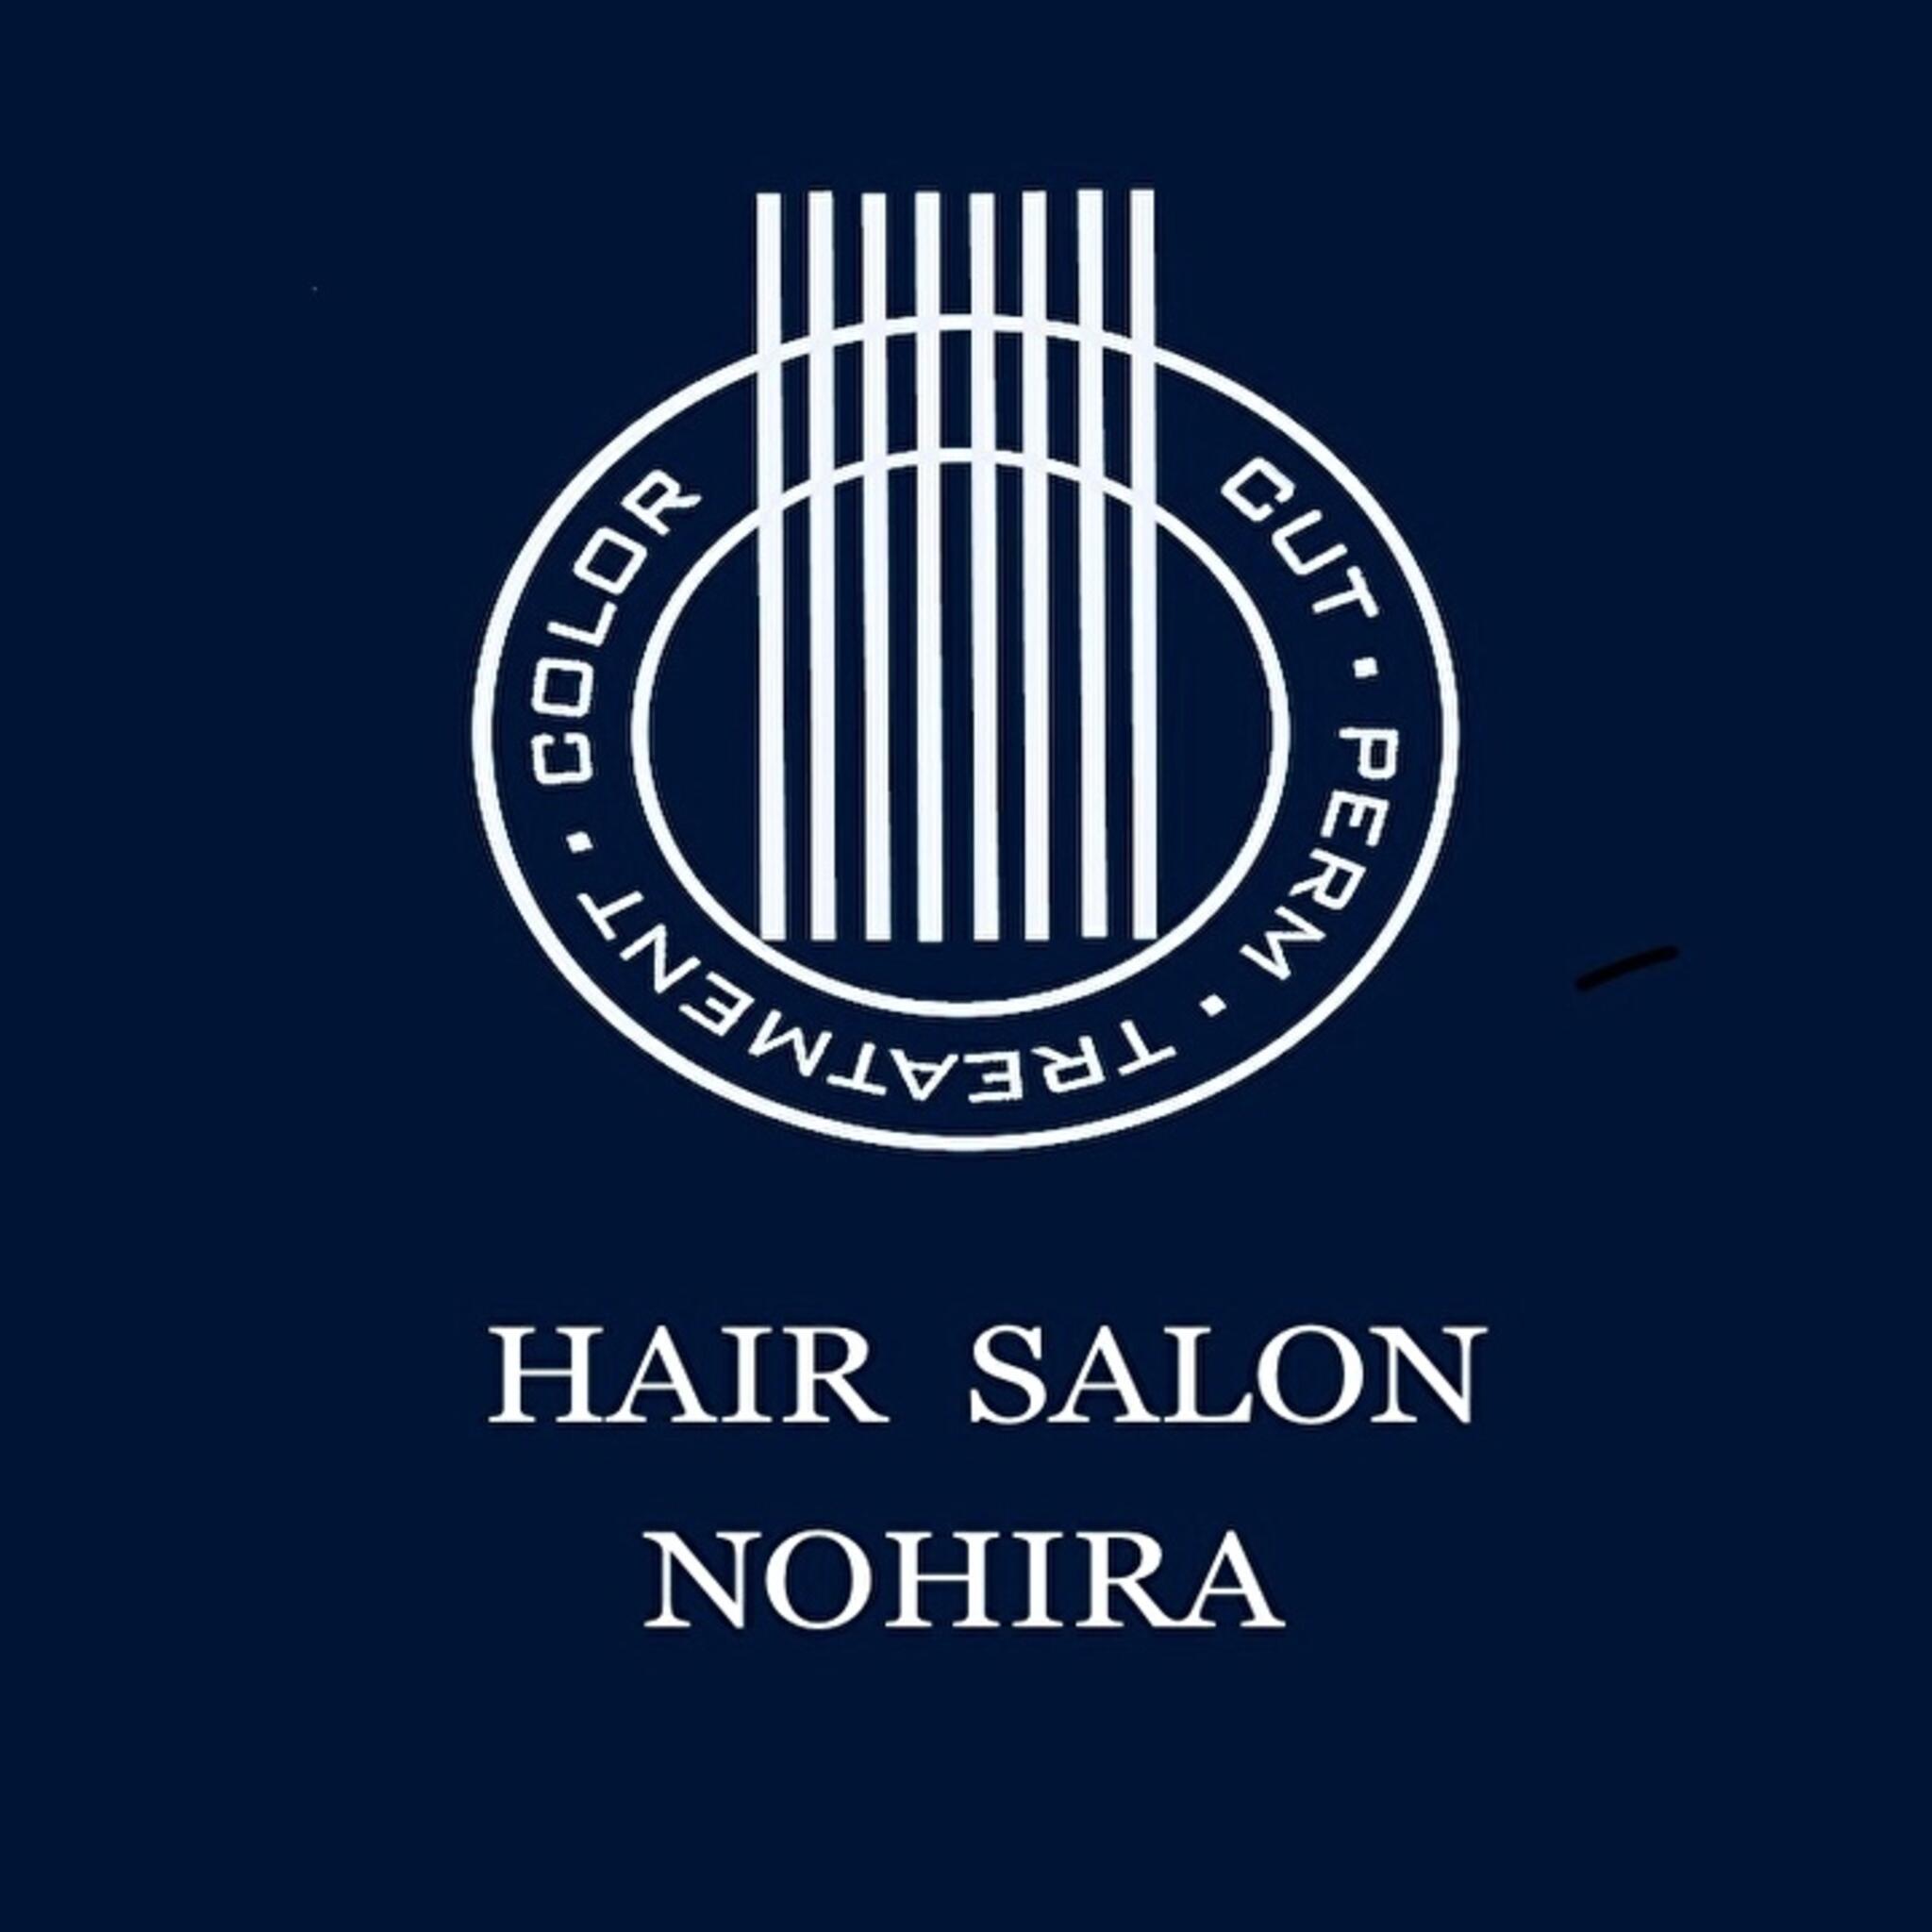 HAIR SALON NOHIRAの代表写真1